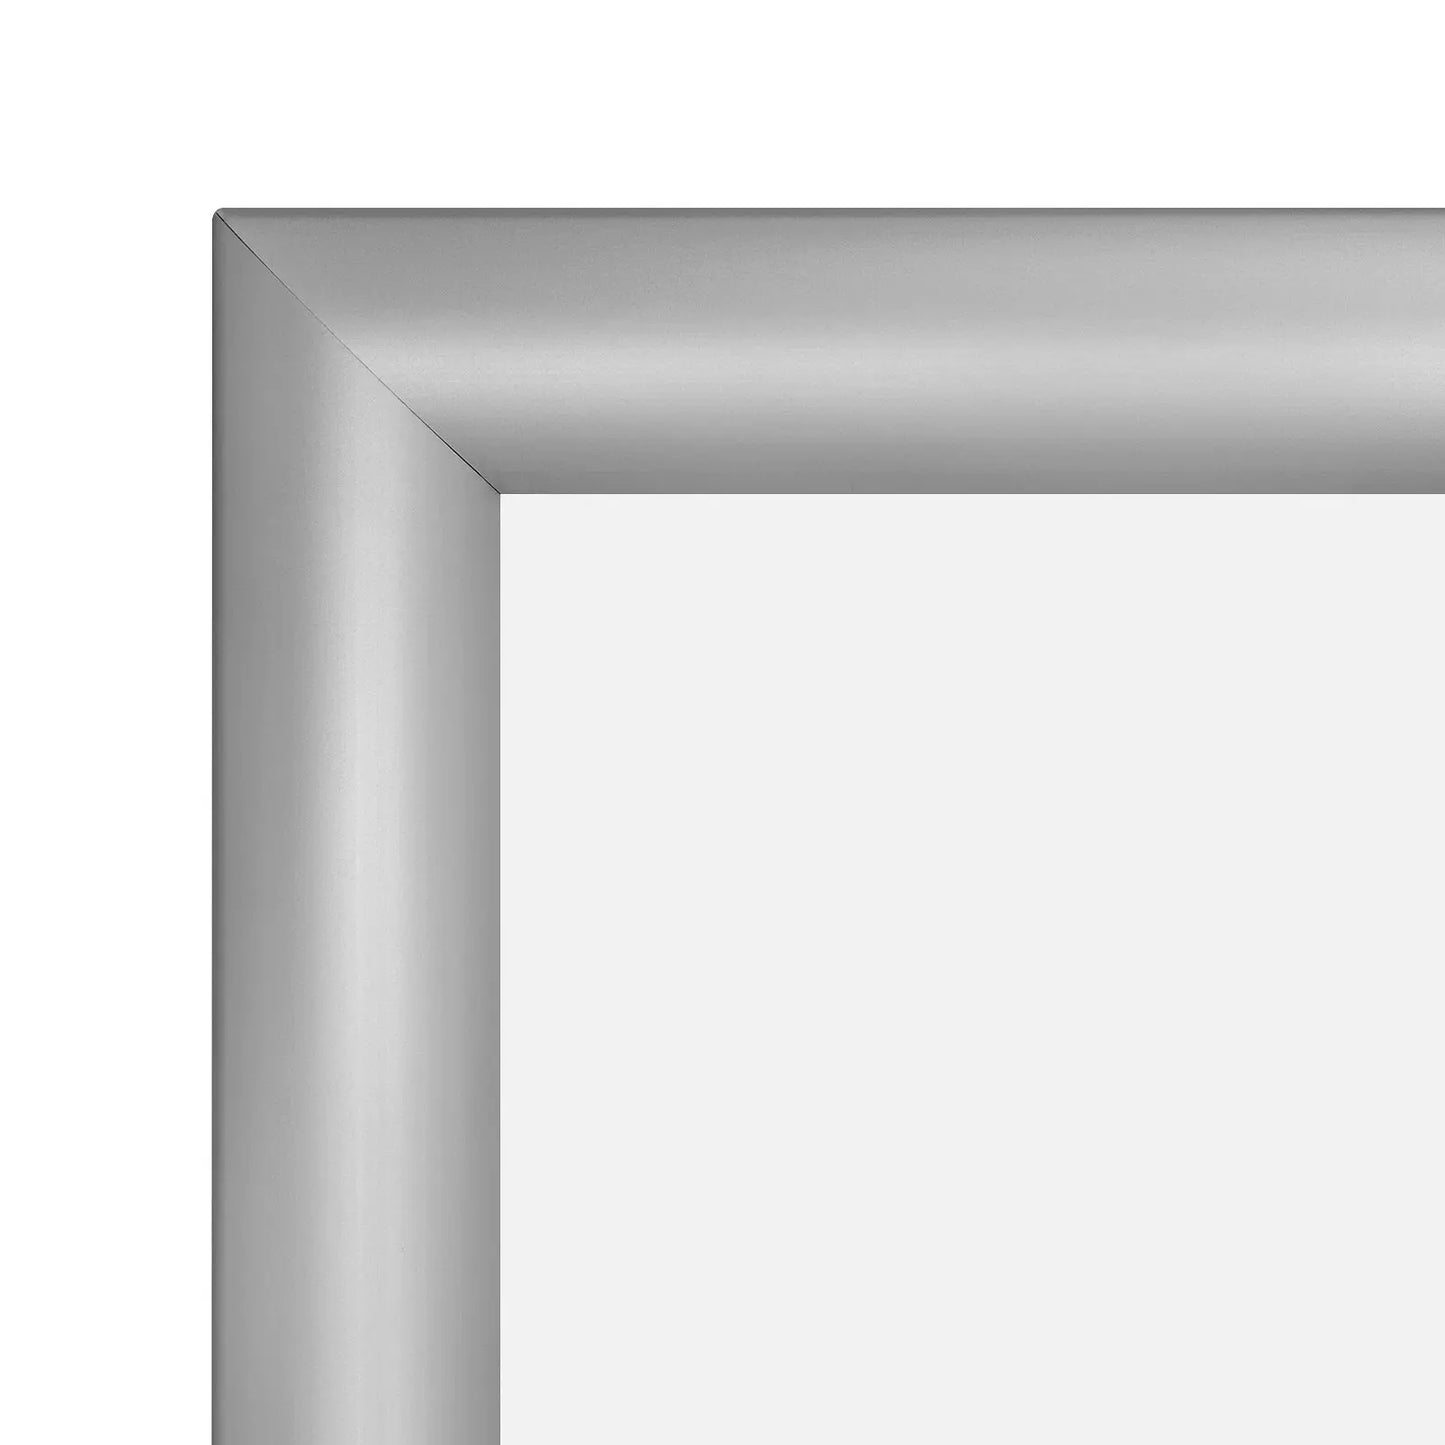 14x20 Silver SnapeZo® Snap Frame - 1.2" Profile - Snap Frames Direct